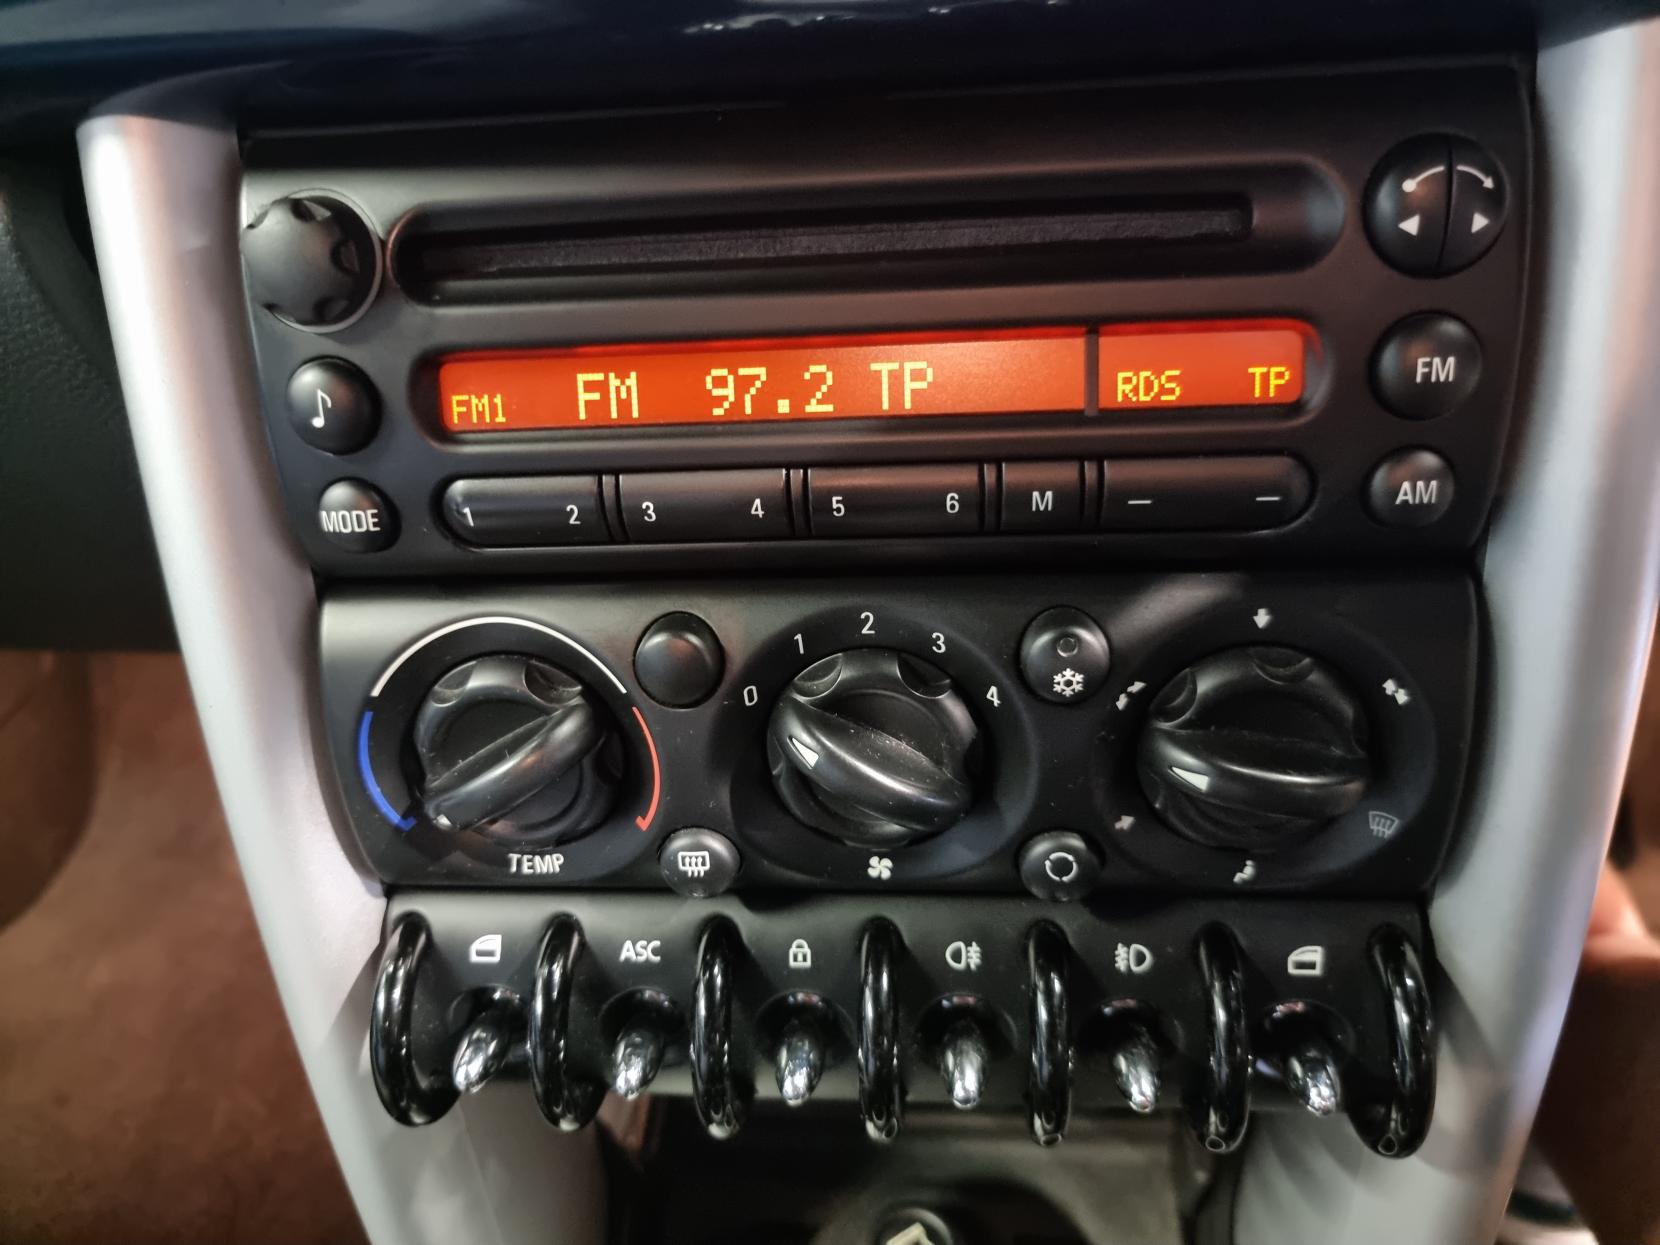 MINI Hatch 1.6 Cooper S Checkmate Hatchback 3dr Petrol Manual Euro 4 (163 bhp)